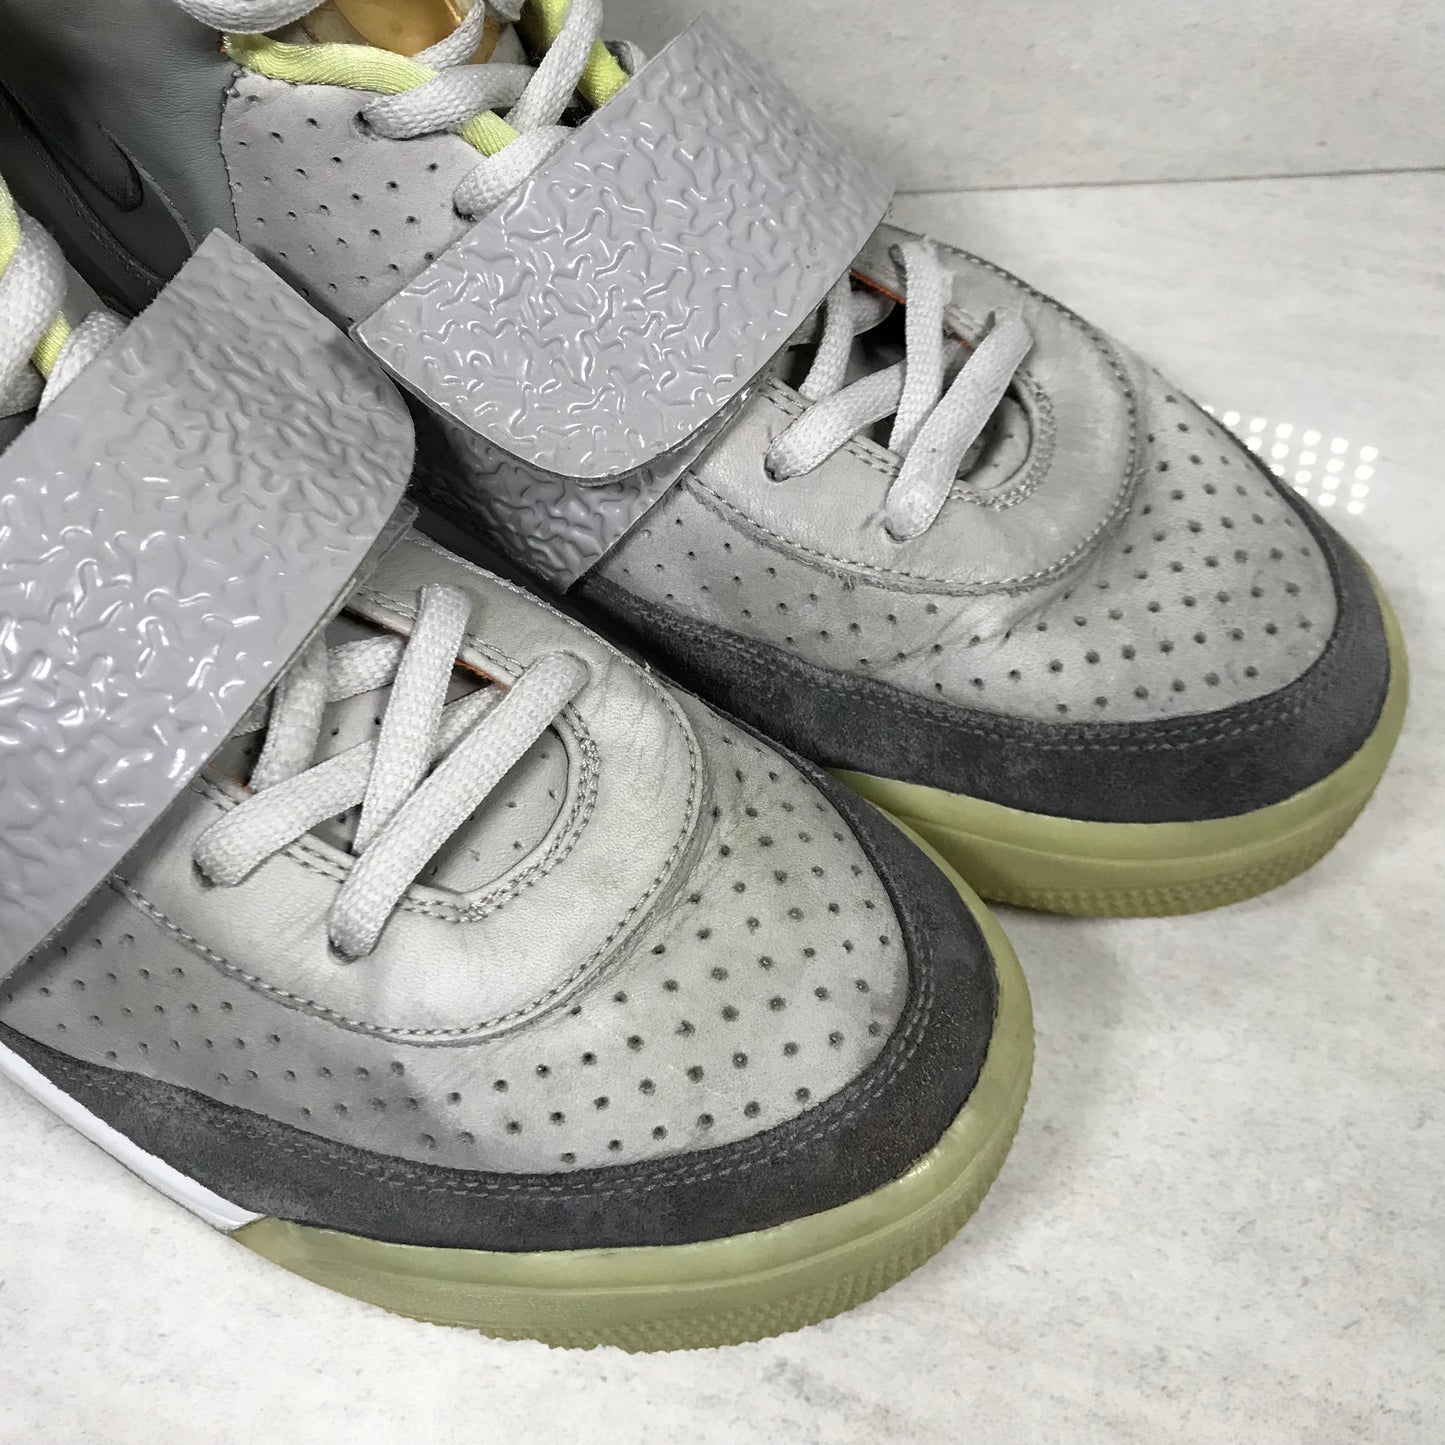 Nike Air Yeezy Zen Grey Size 9.5